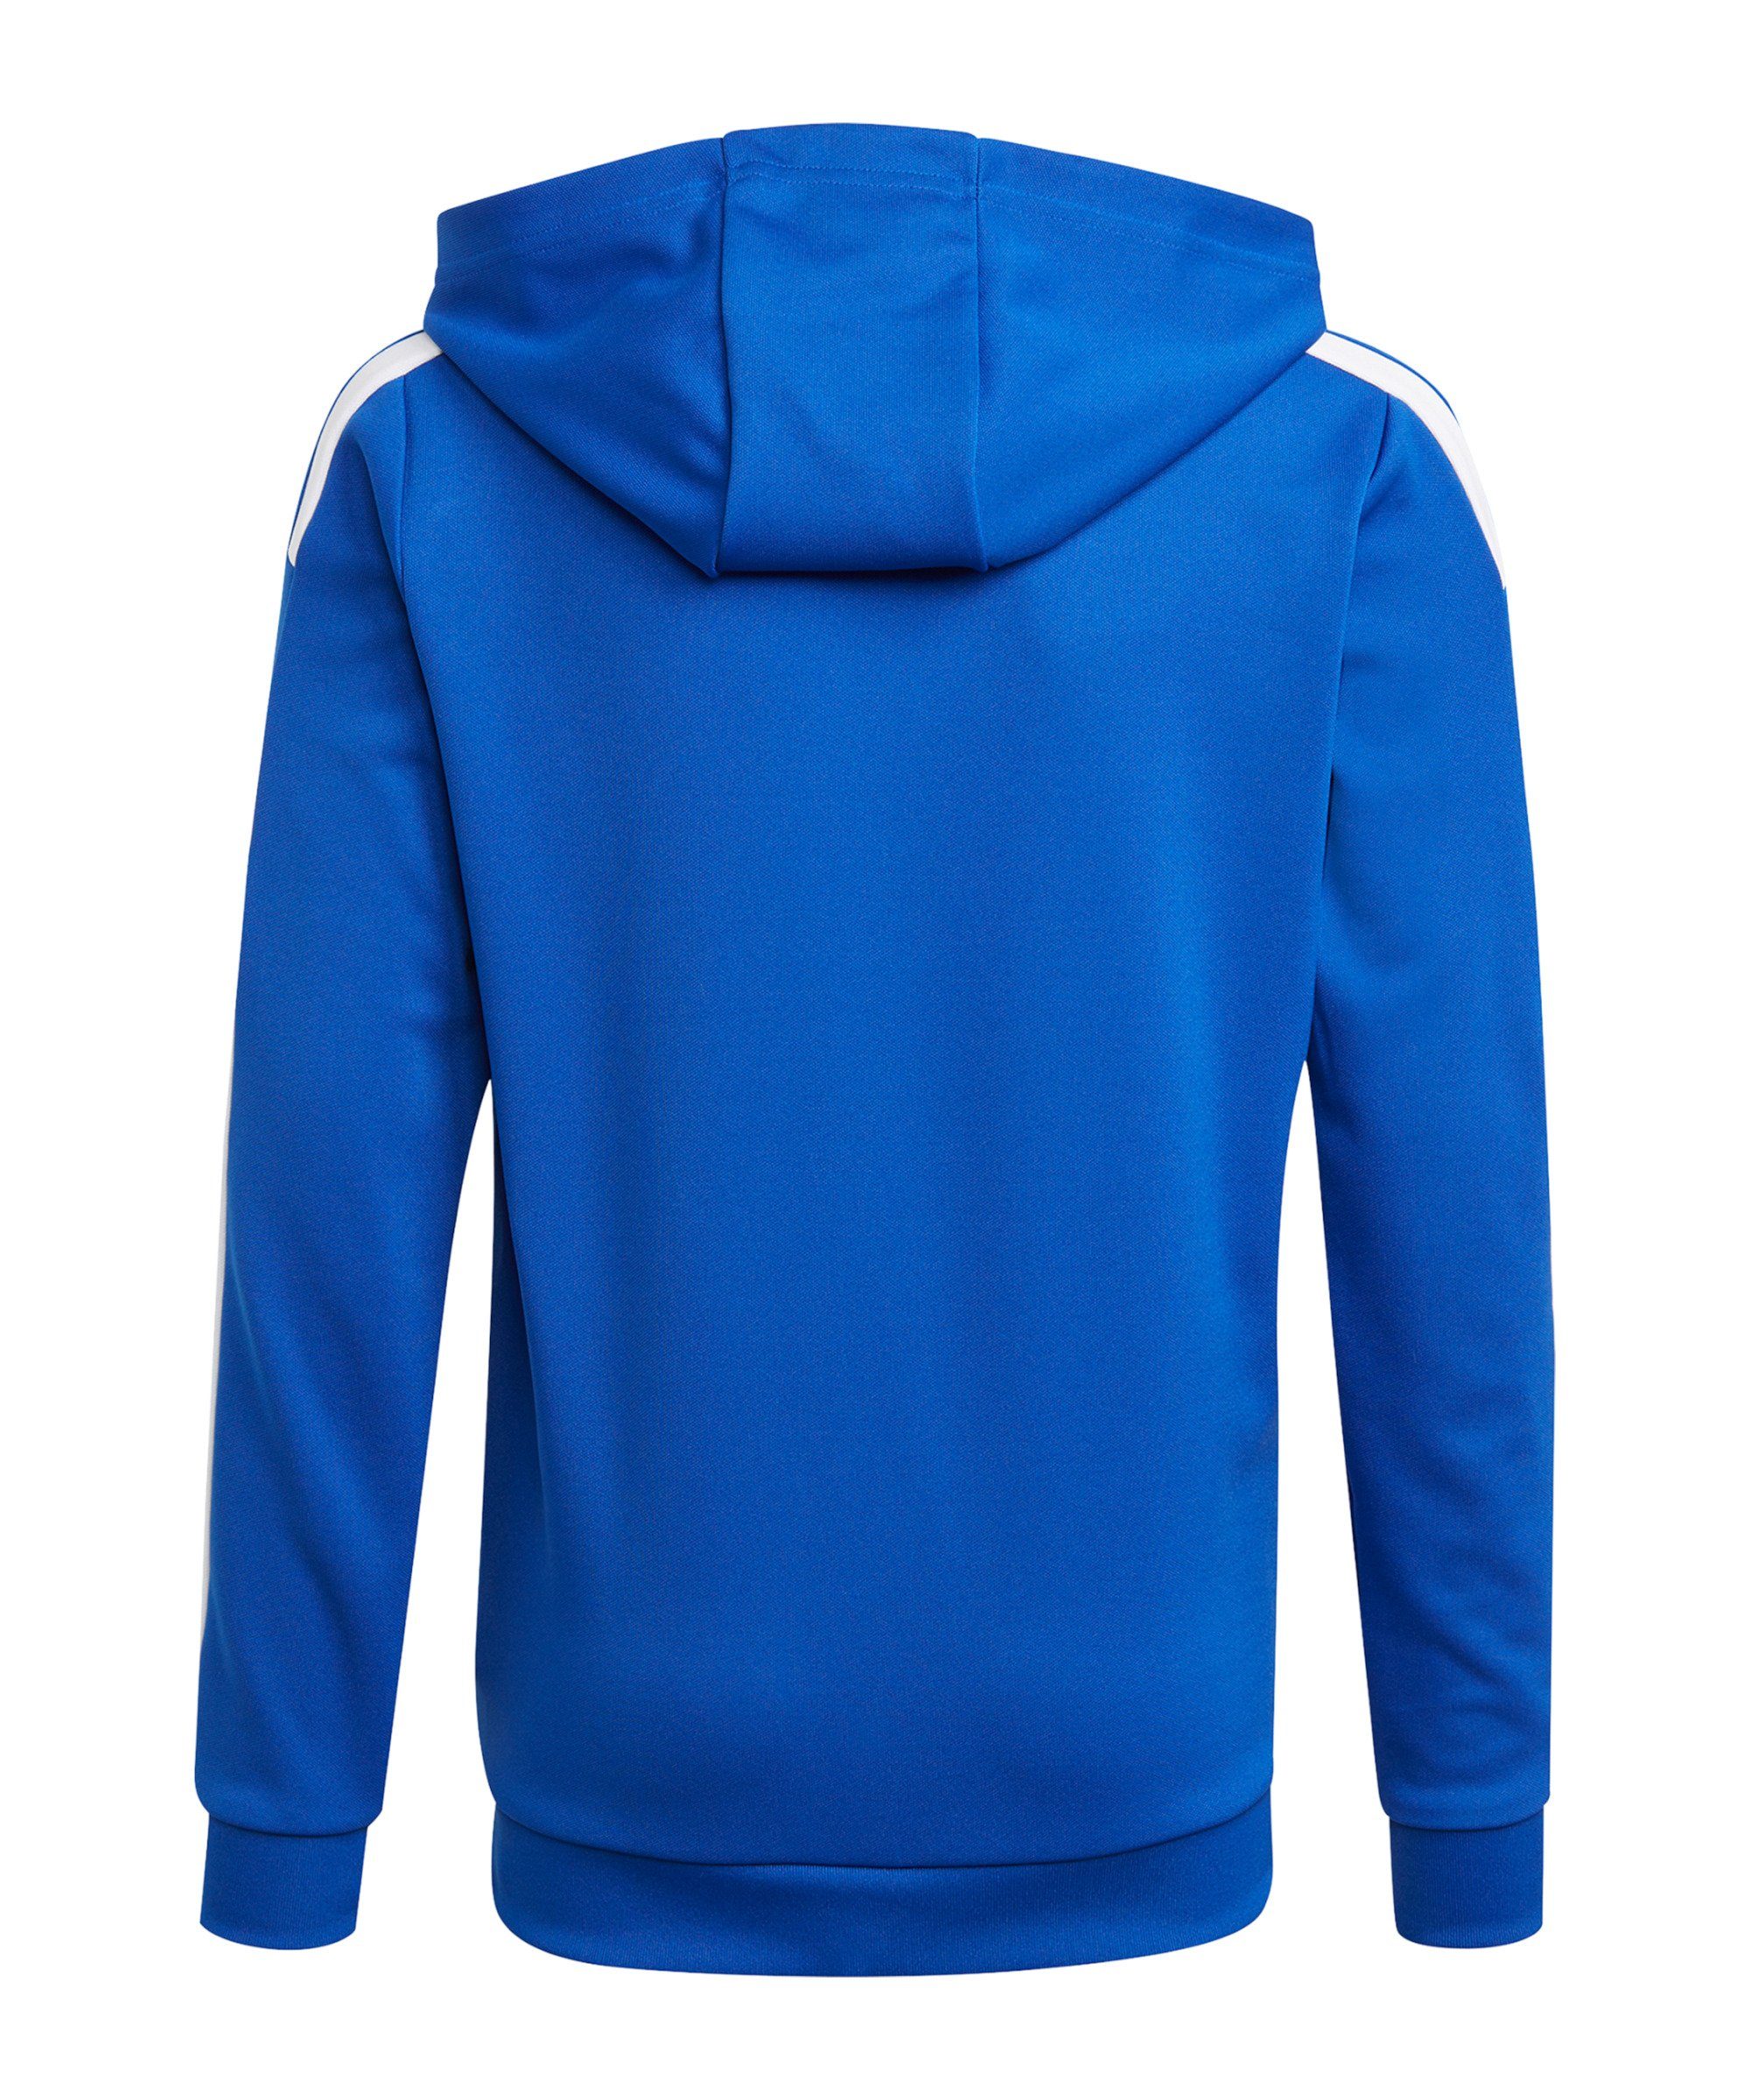 21 blauweiss Performance Sweatshirt adidas Kids Hoody Squadra